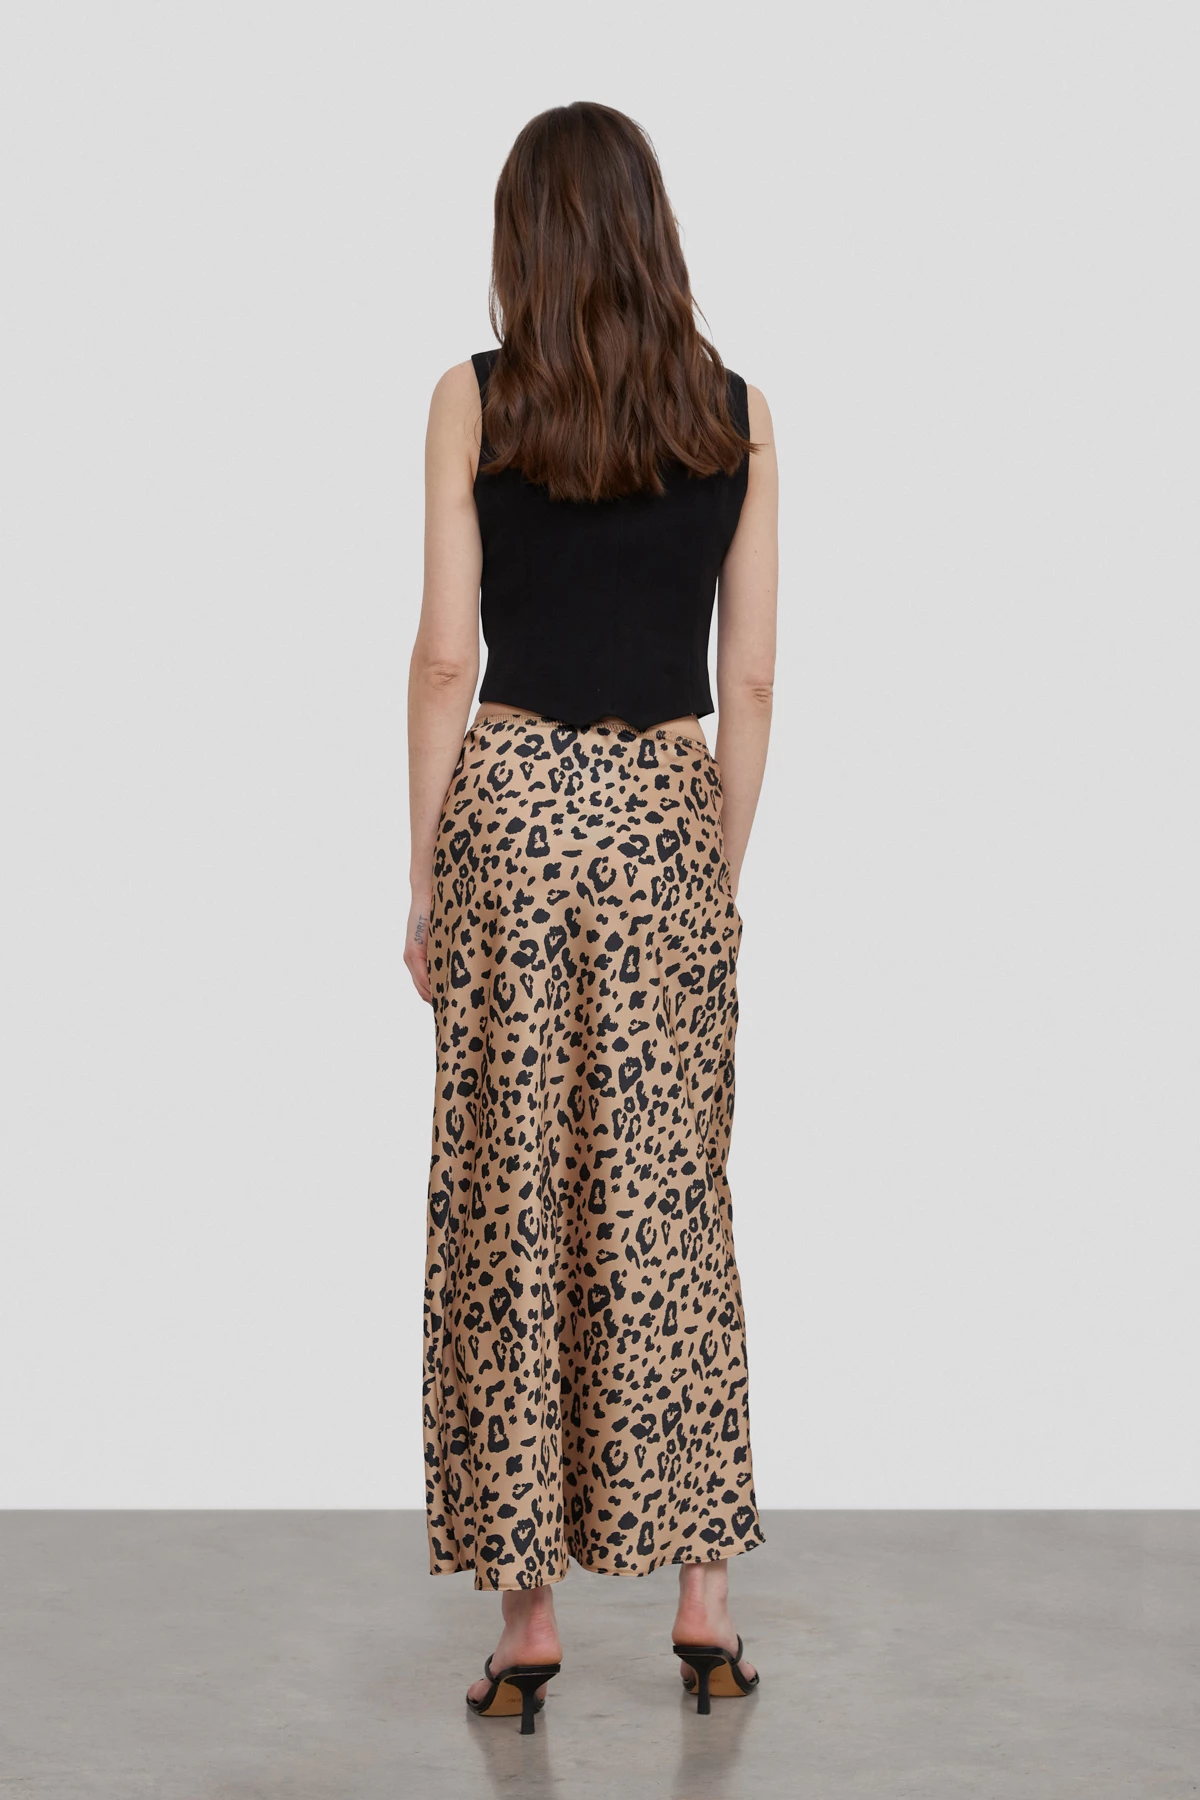 Mid-length satin skirt in leopard print, photo 3